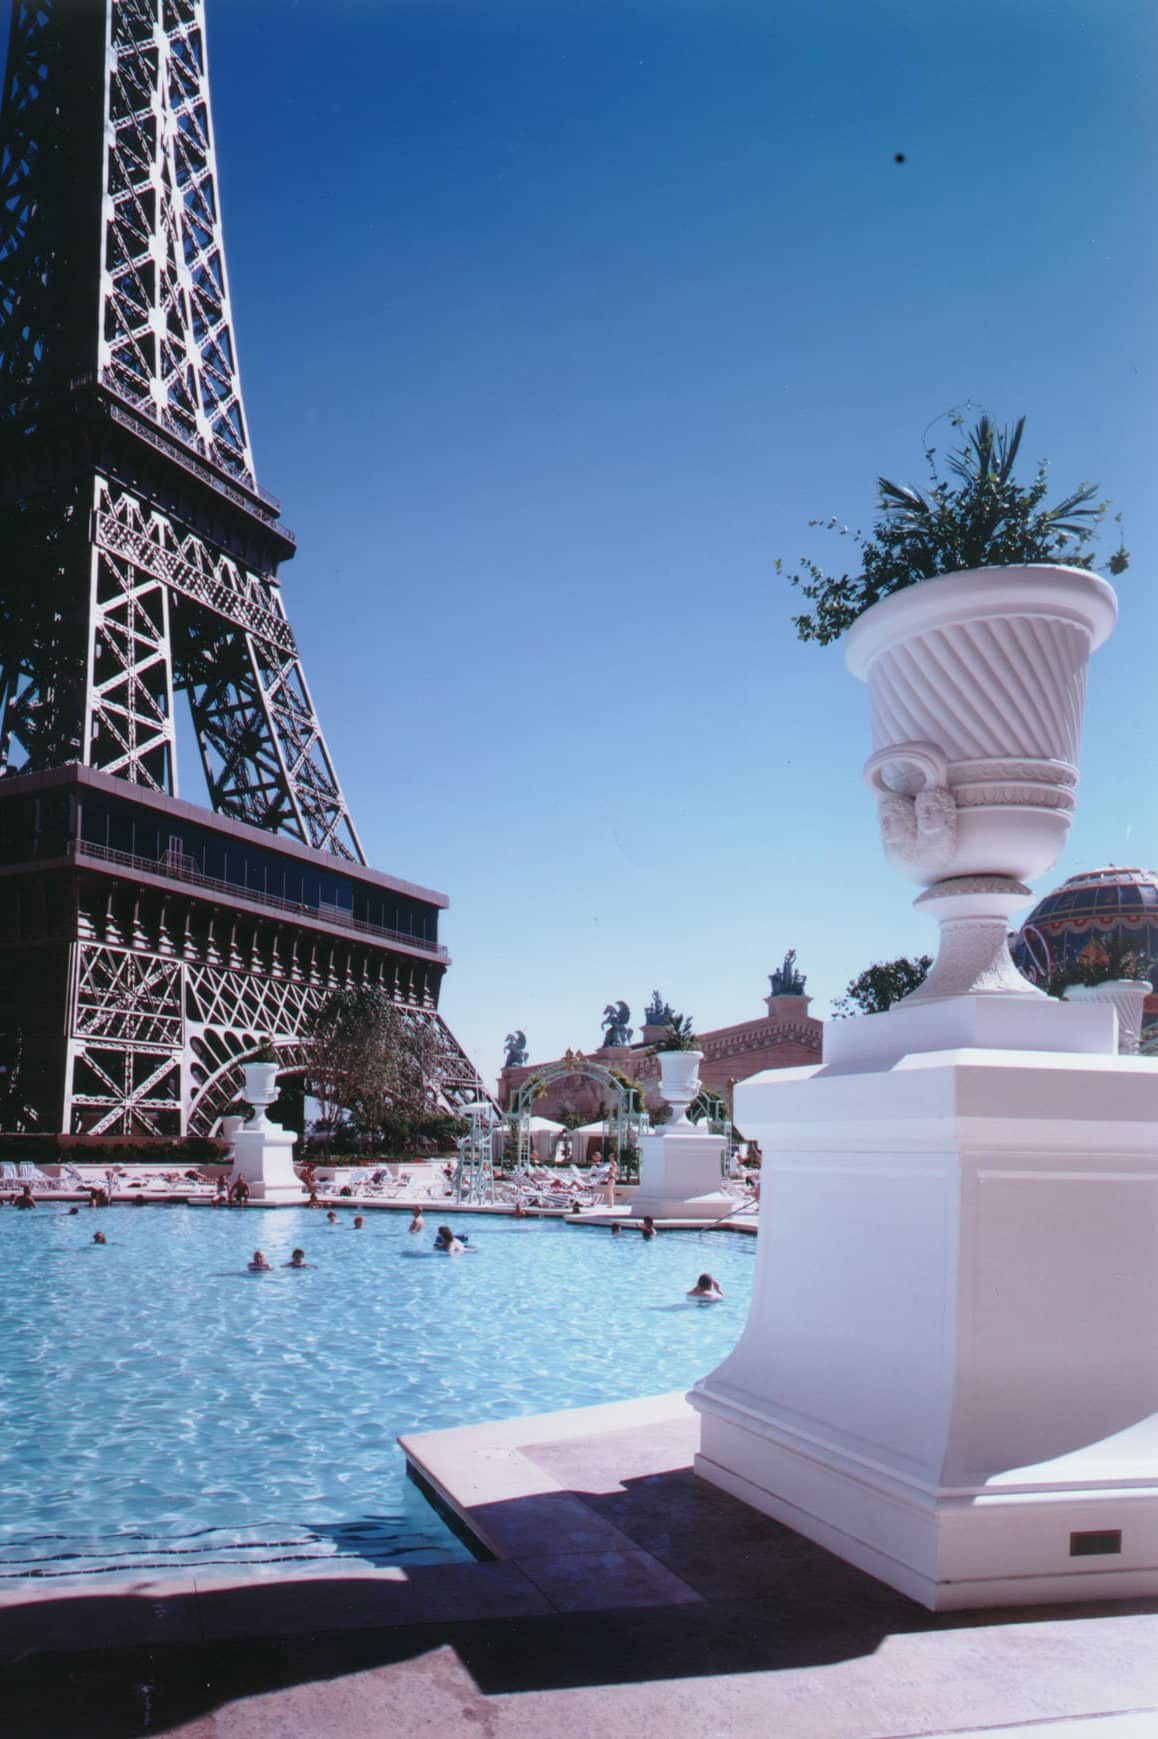 Paris Hotel Las Vegas  An In Depth Look Inside Paris Hotel Las